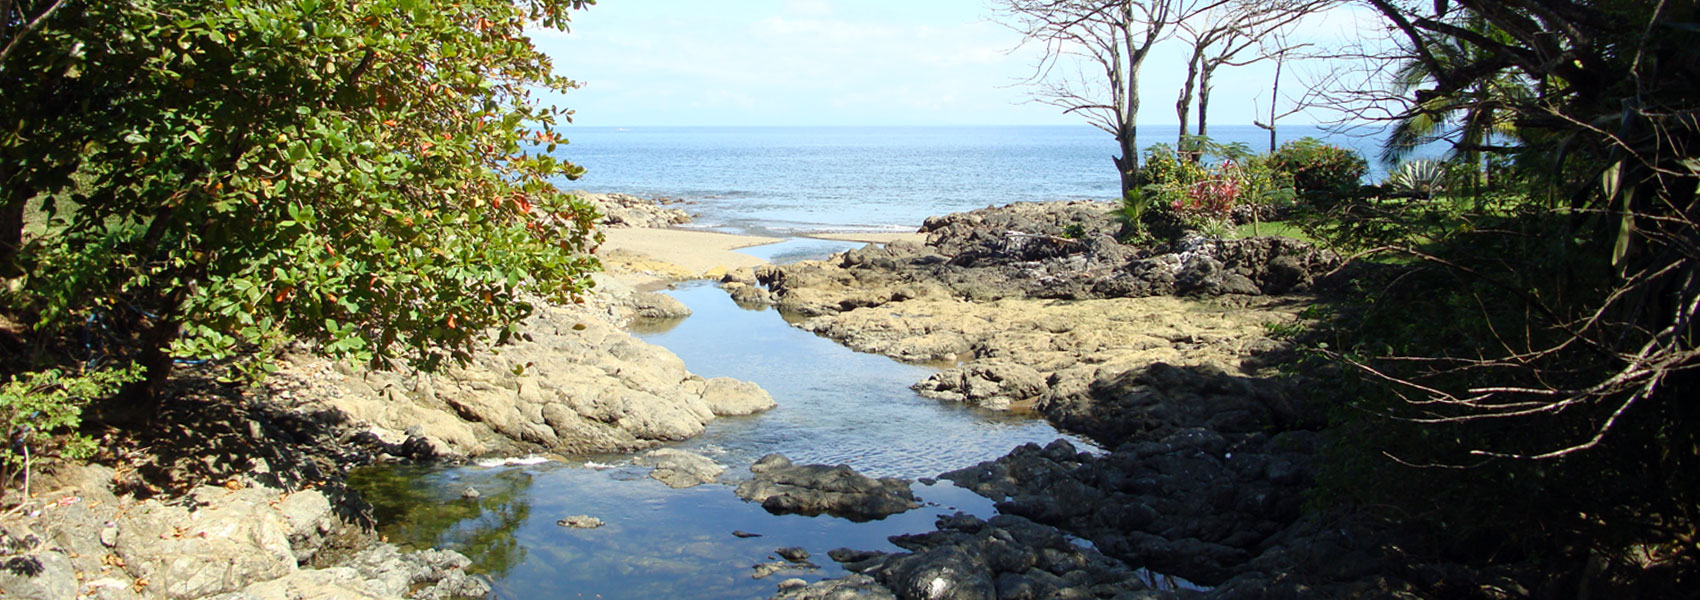 Montezuma is one of Costa Rica's most popular ecotourism destinations.